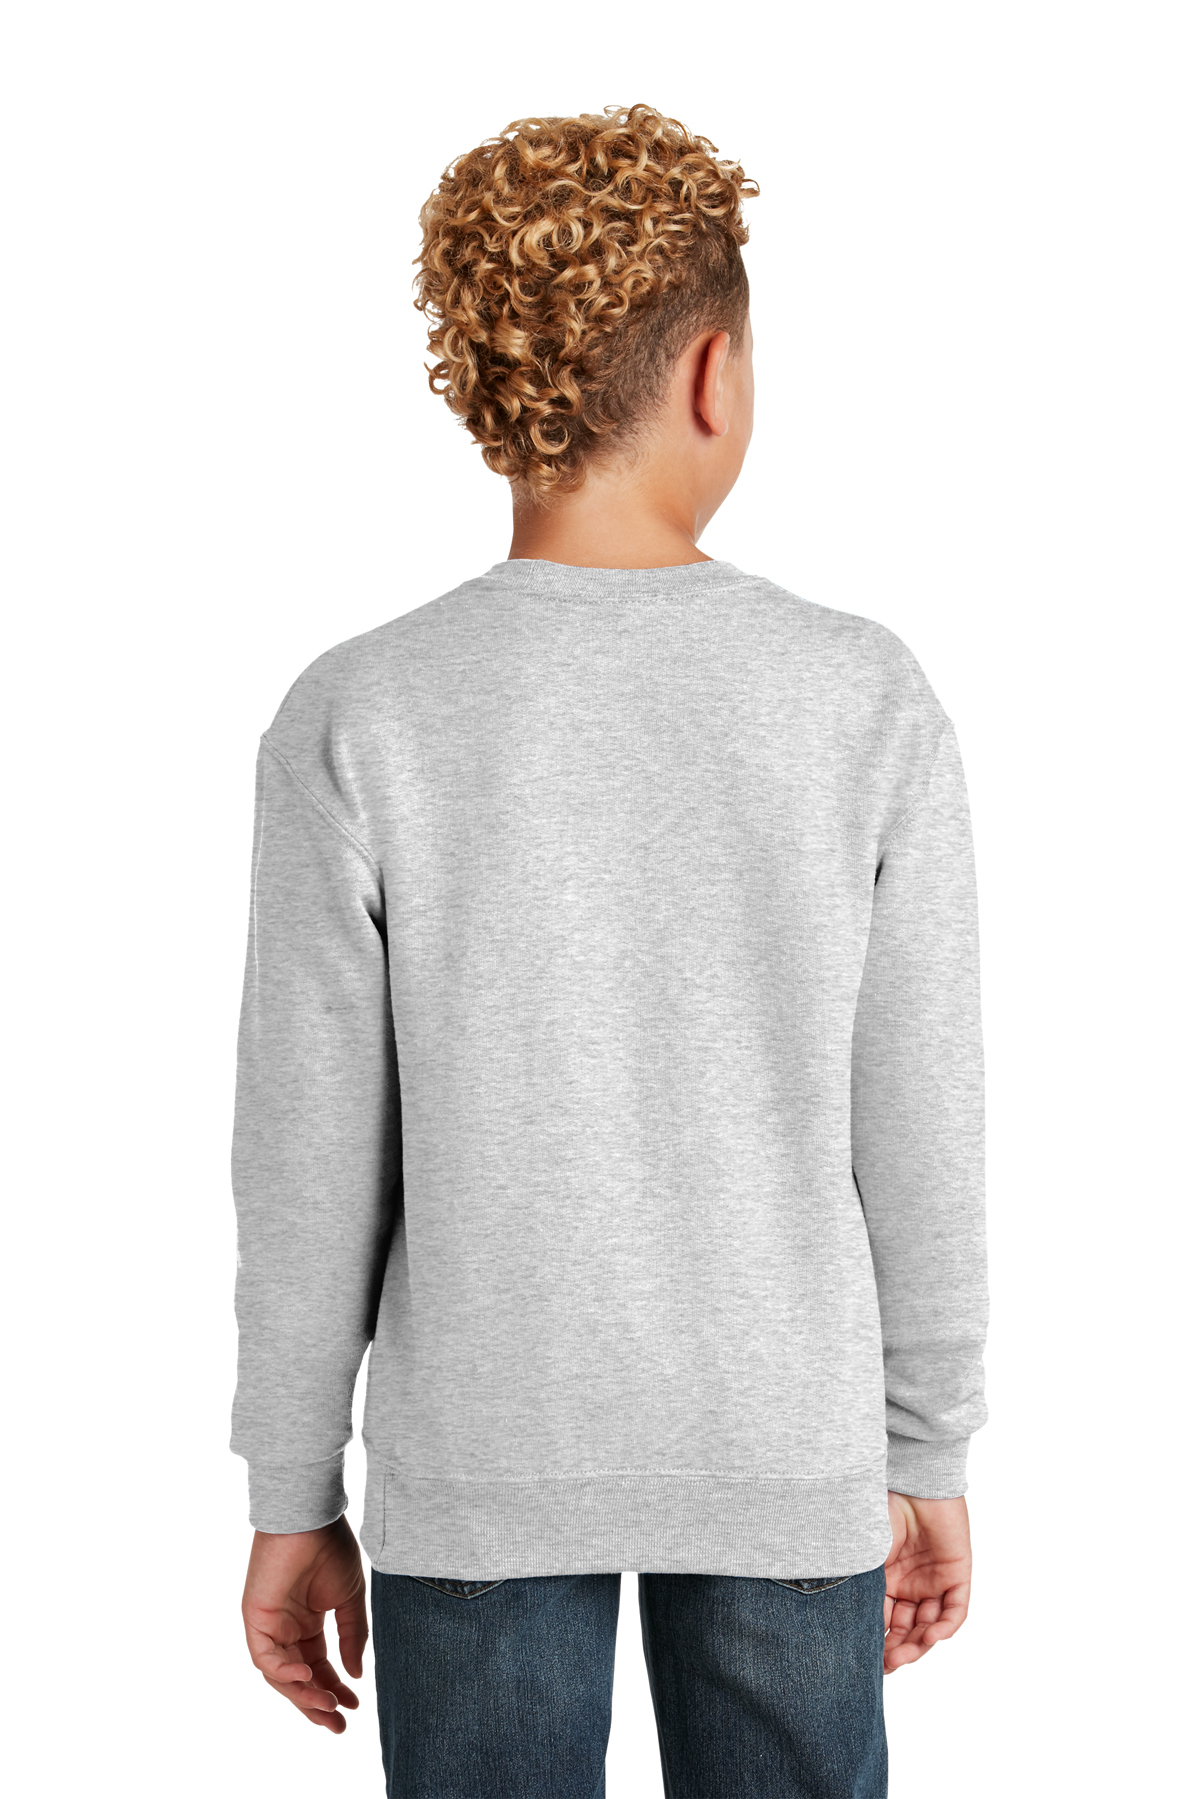 Jerzees Youth Nublend Crewneck Sweatshirt Crewnecks Sweatshirts Fleece Sanmar [ 1799 x 1200 Pixel ]